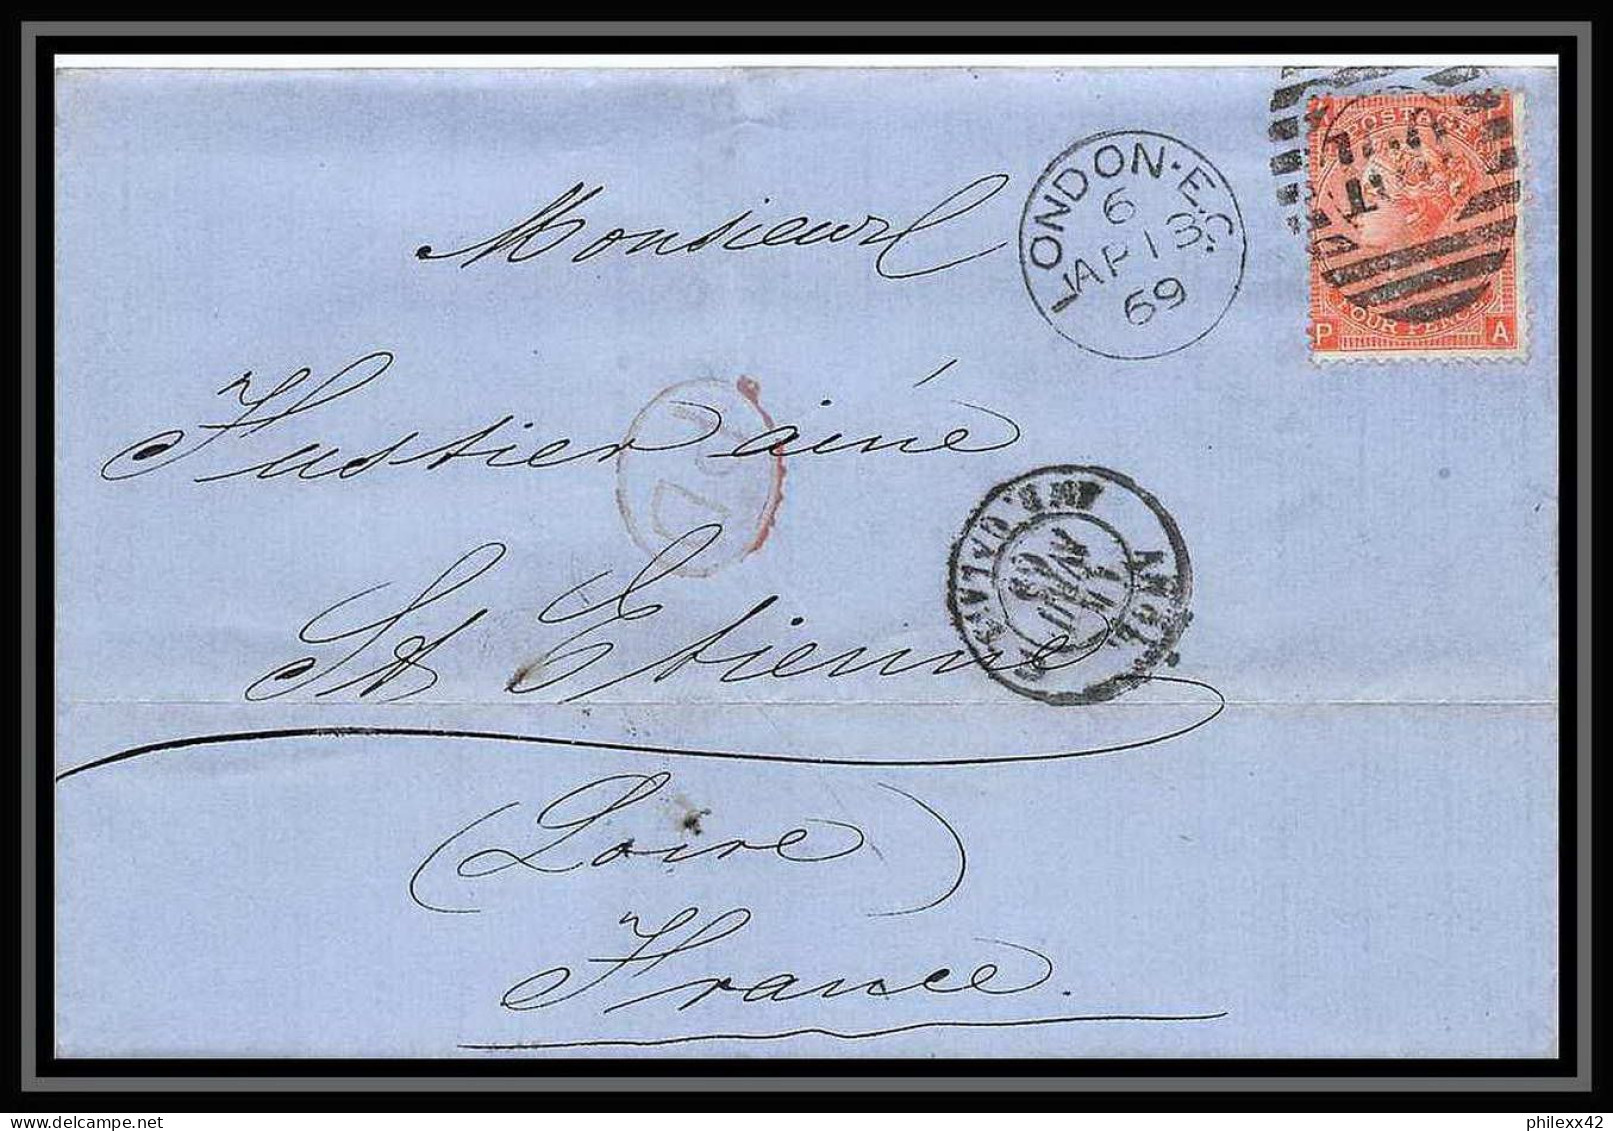 35835 N°32 Victoria 4p Red London St Etienne France 1869 Cachet 100 Lettre Cover Grande Bretagne England - Storia Postale